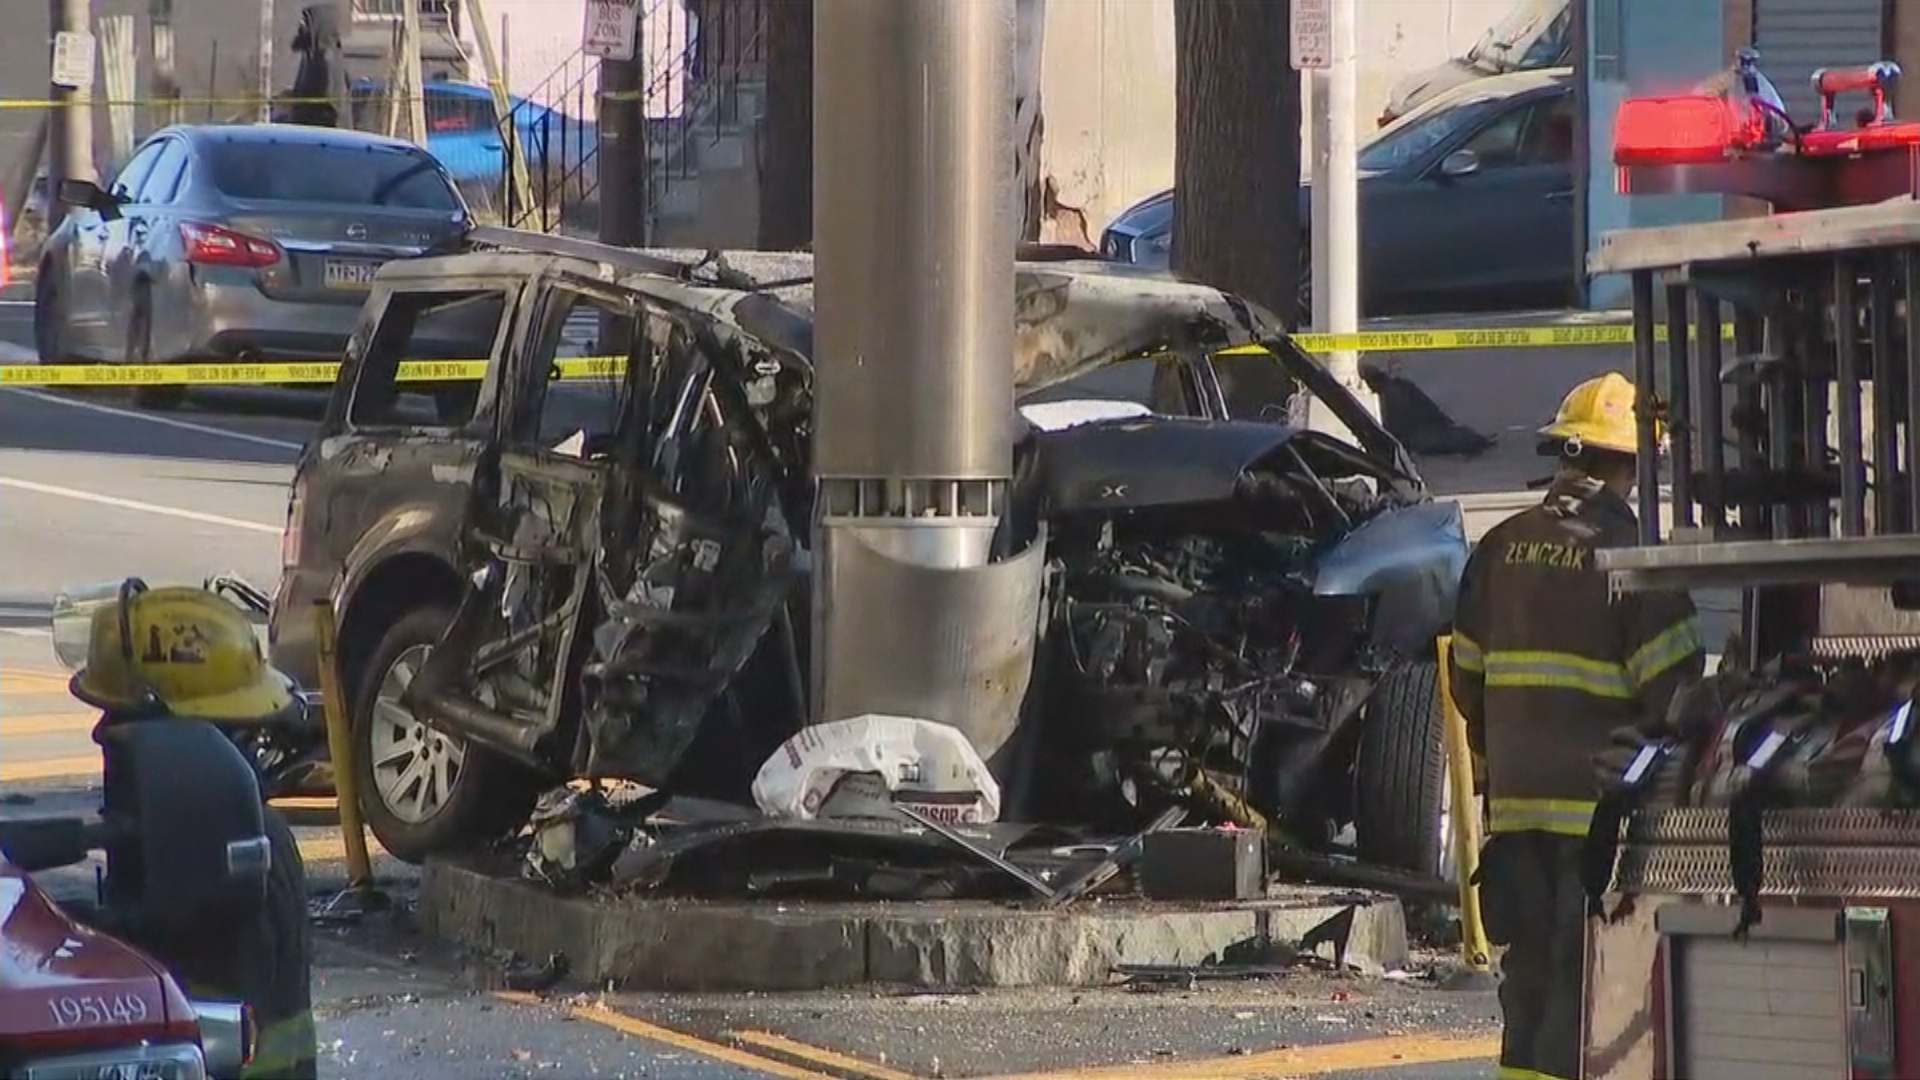 Man Dies After Fiery Car Crash In North Philadelphia: Police